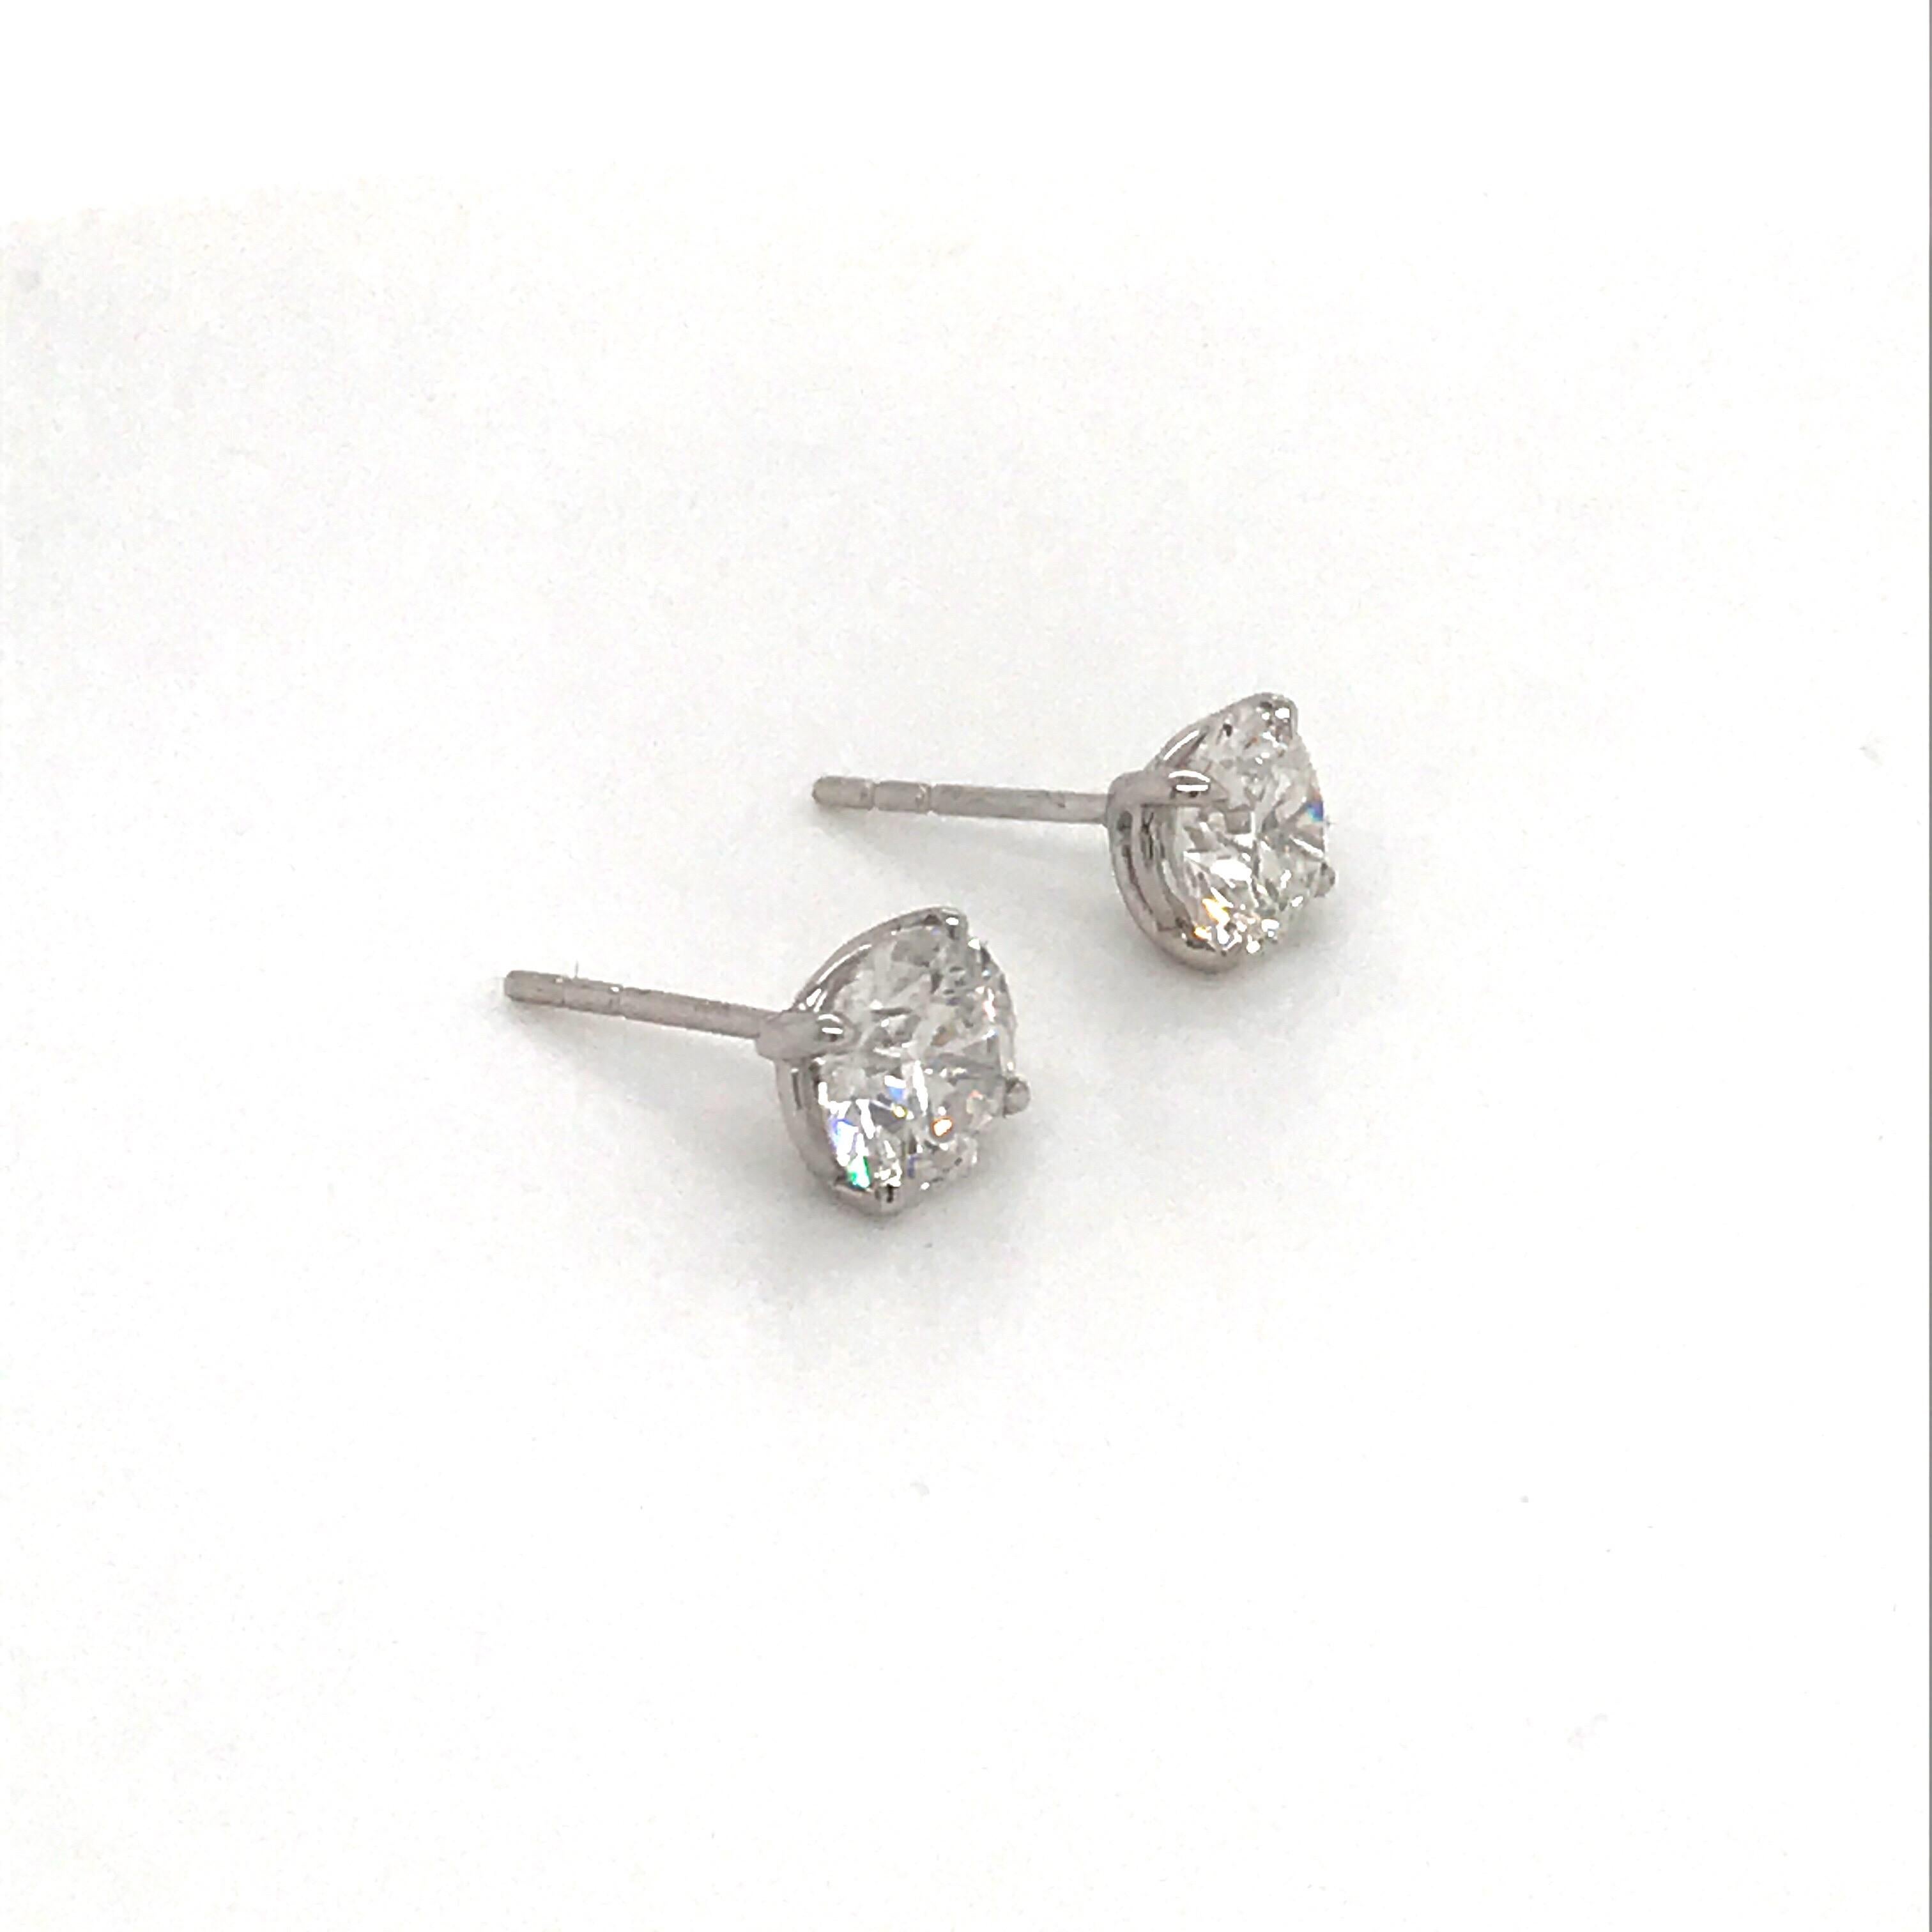 1 carat diamond earrings actual size